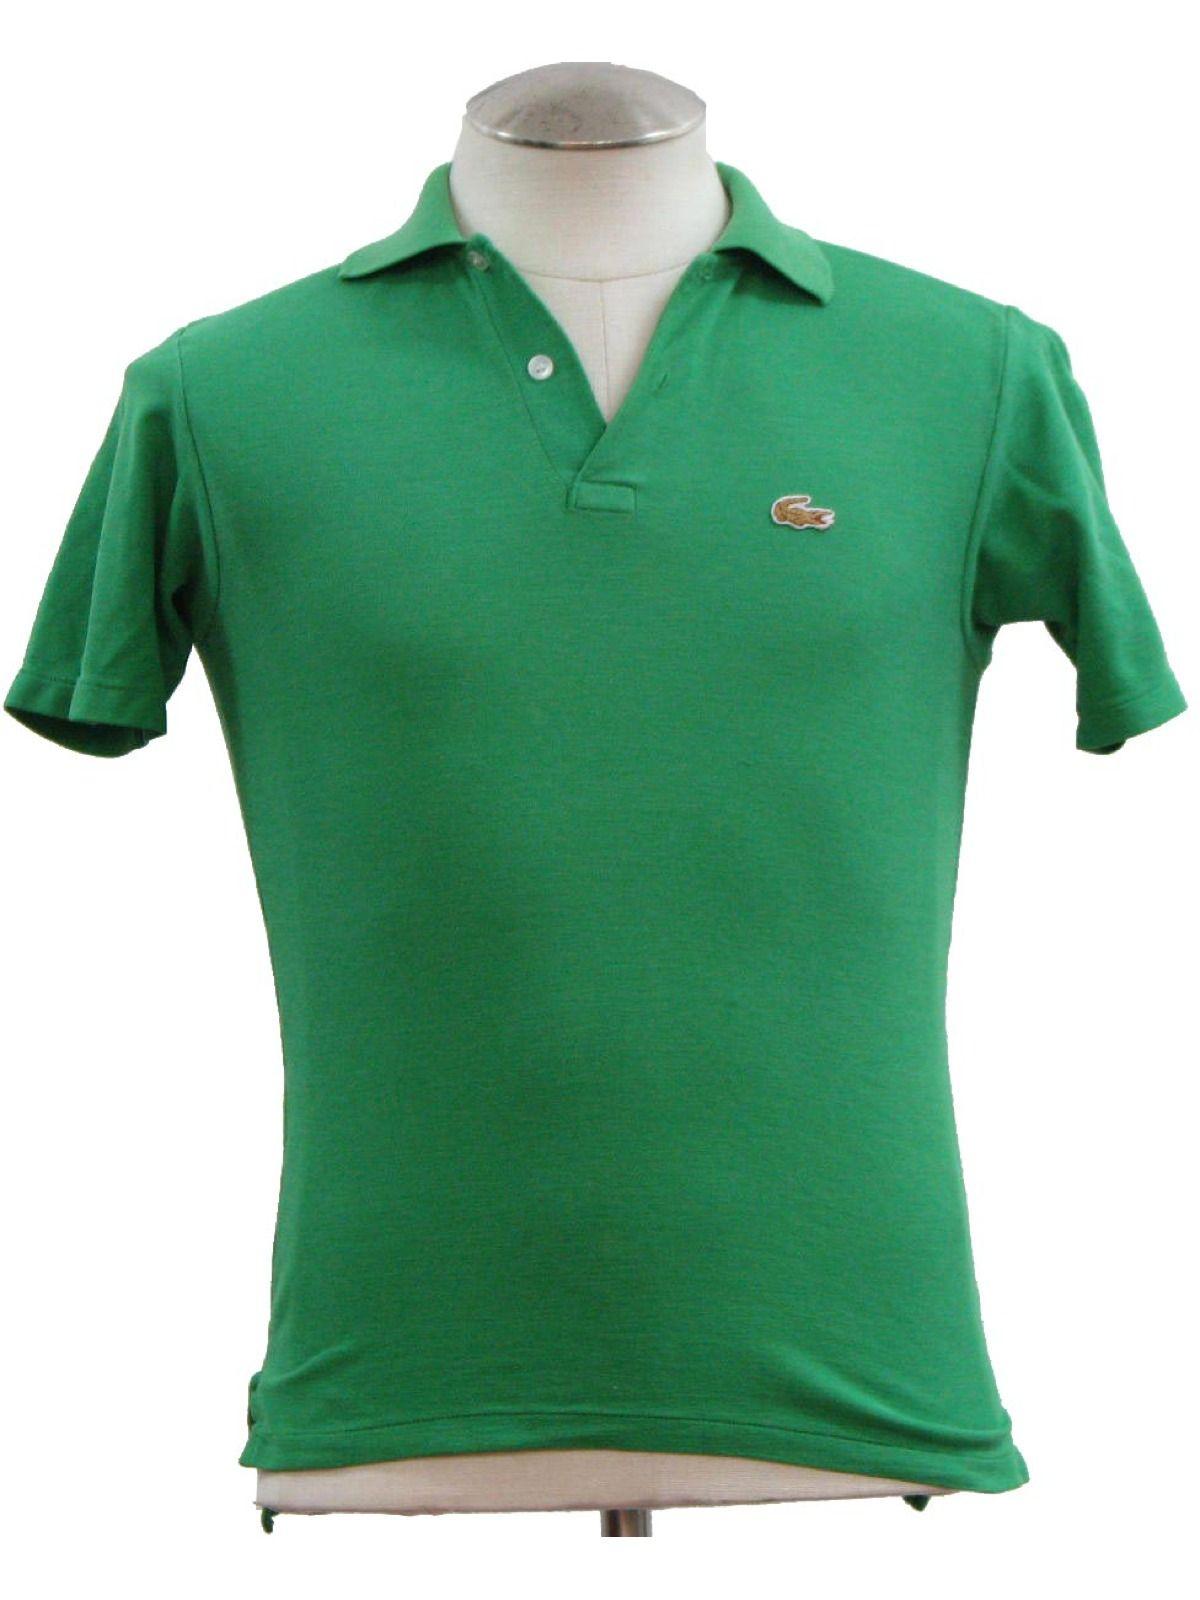 1980s Izod Logo - Eighties Izod Shirt: 80s -Izod- Mens or boys green woven cotton and ...